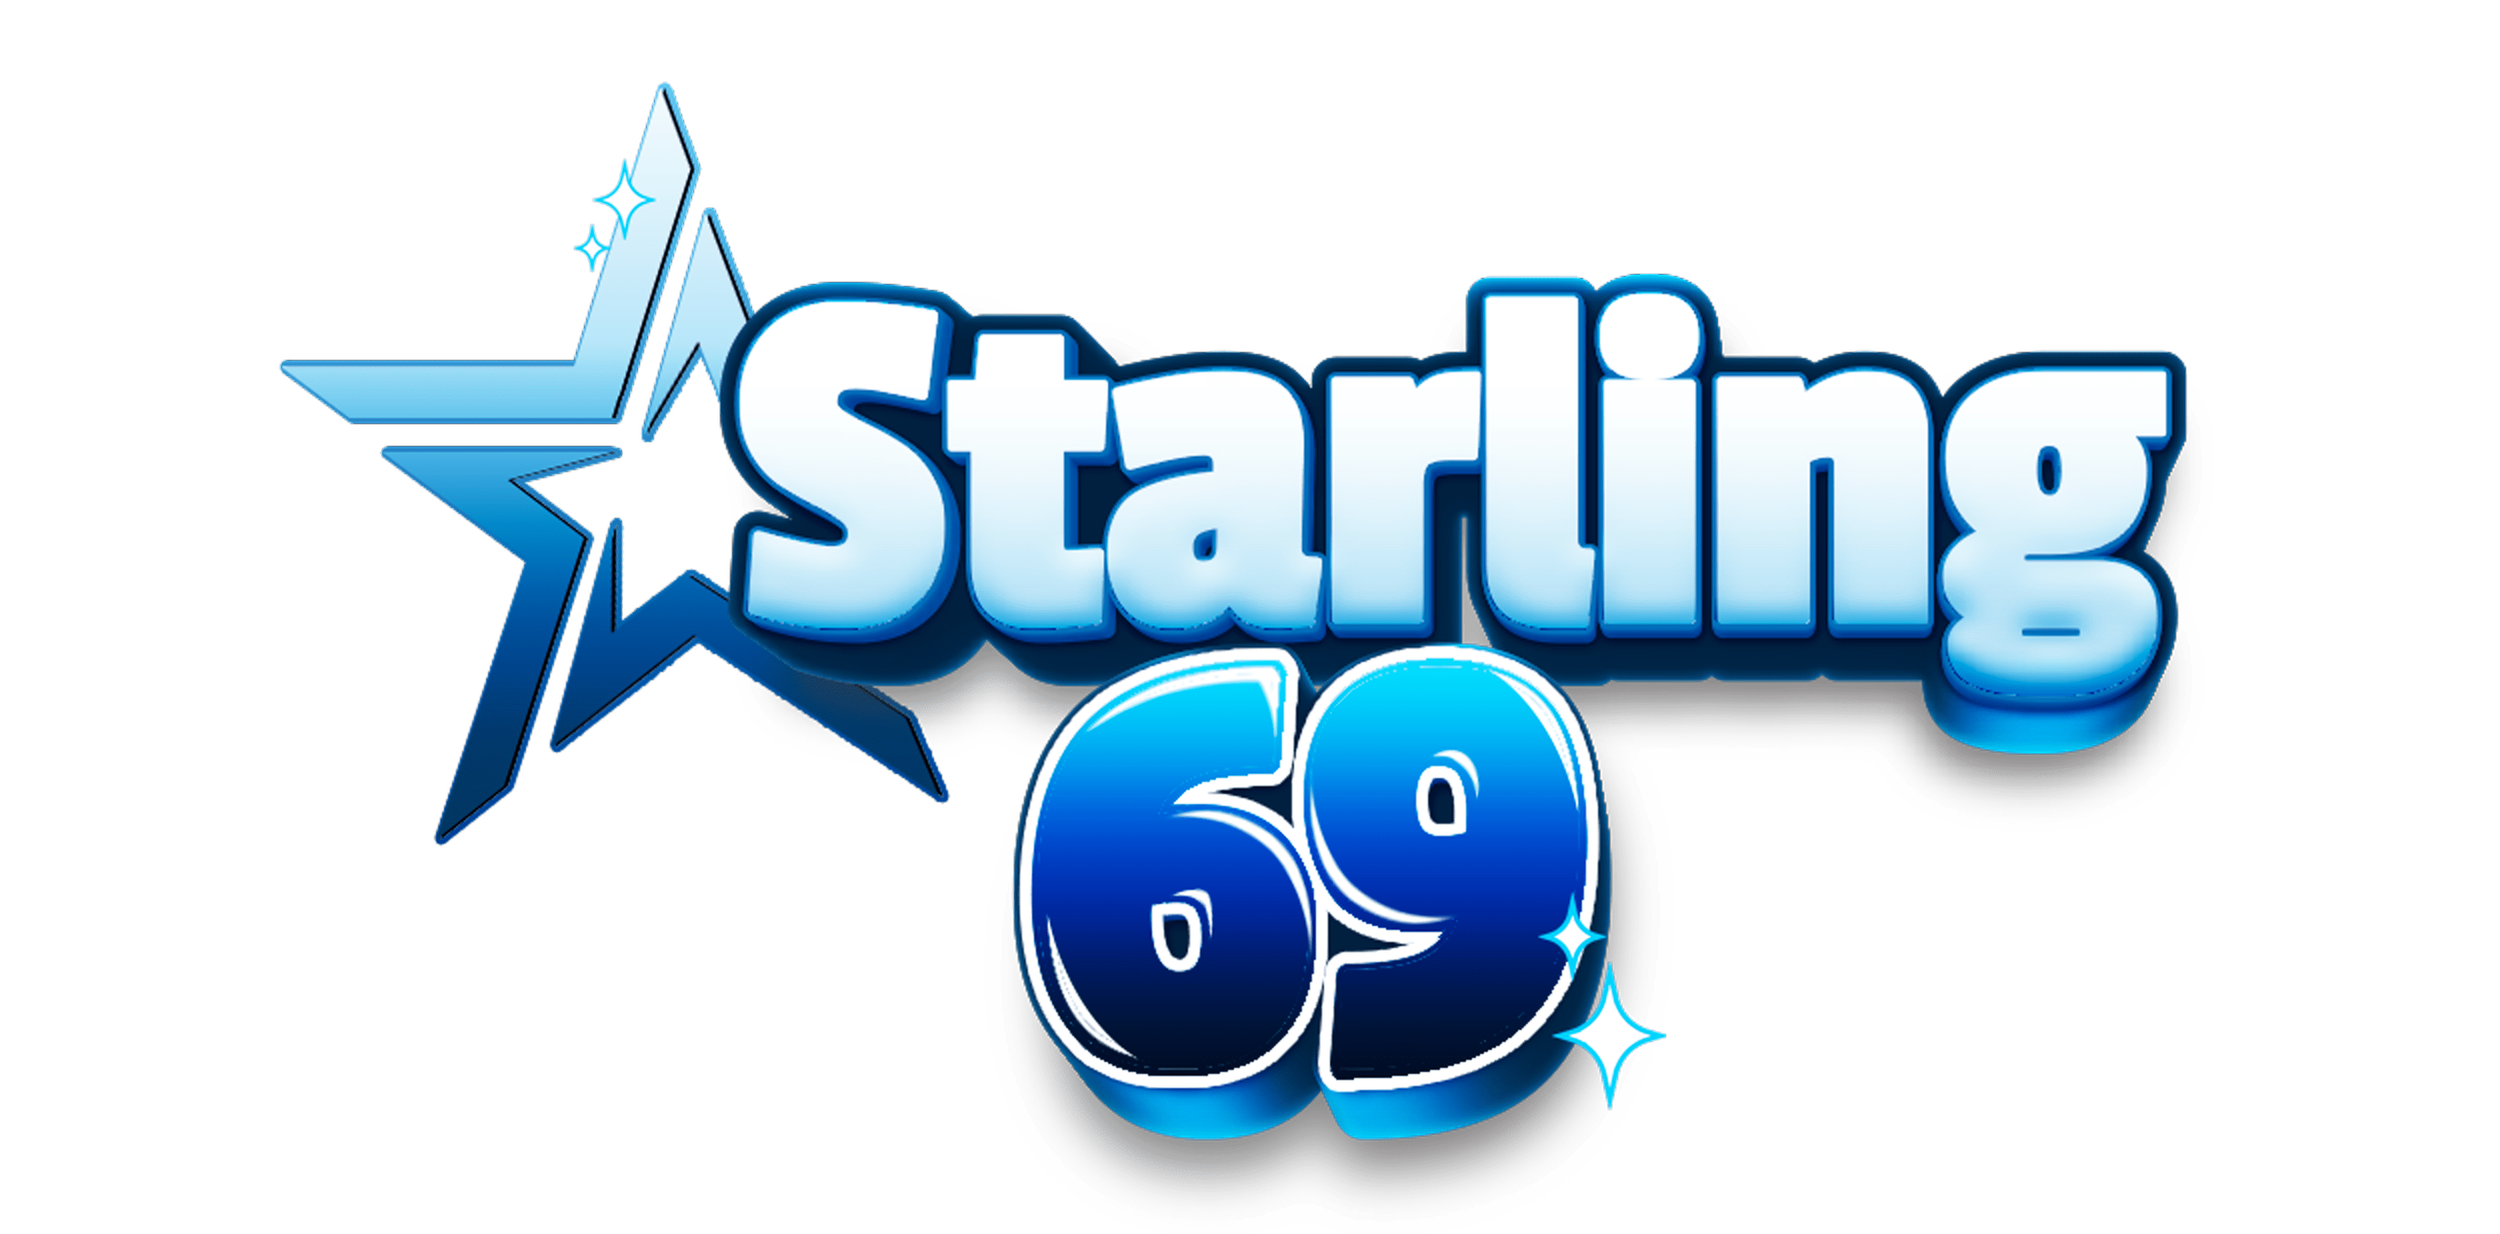 STARLING69